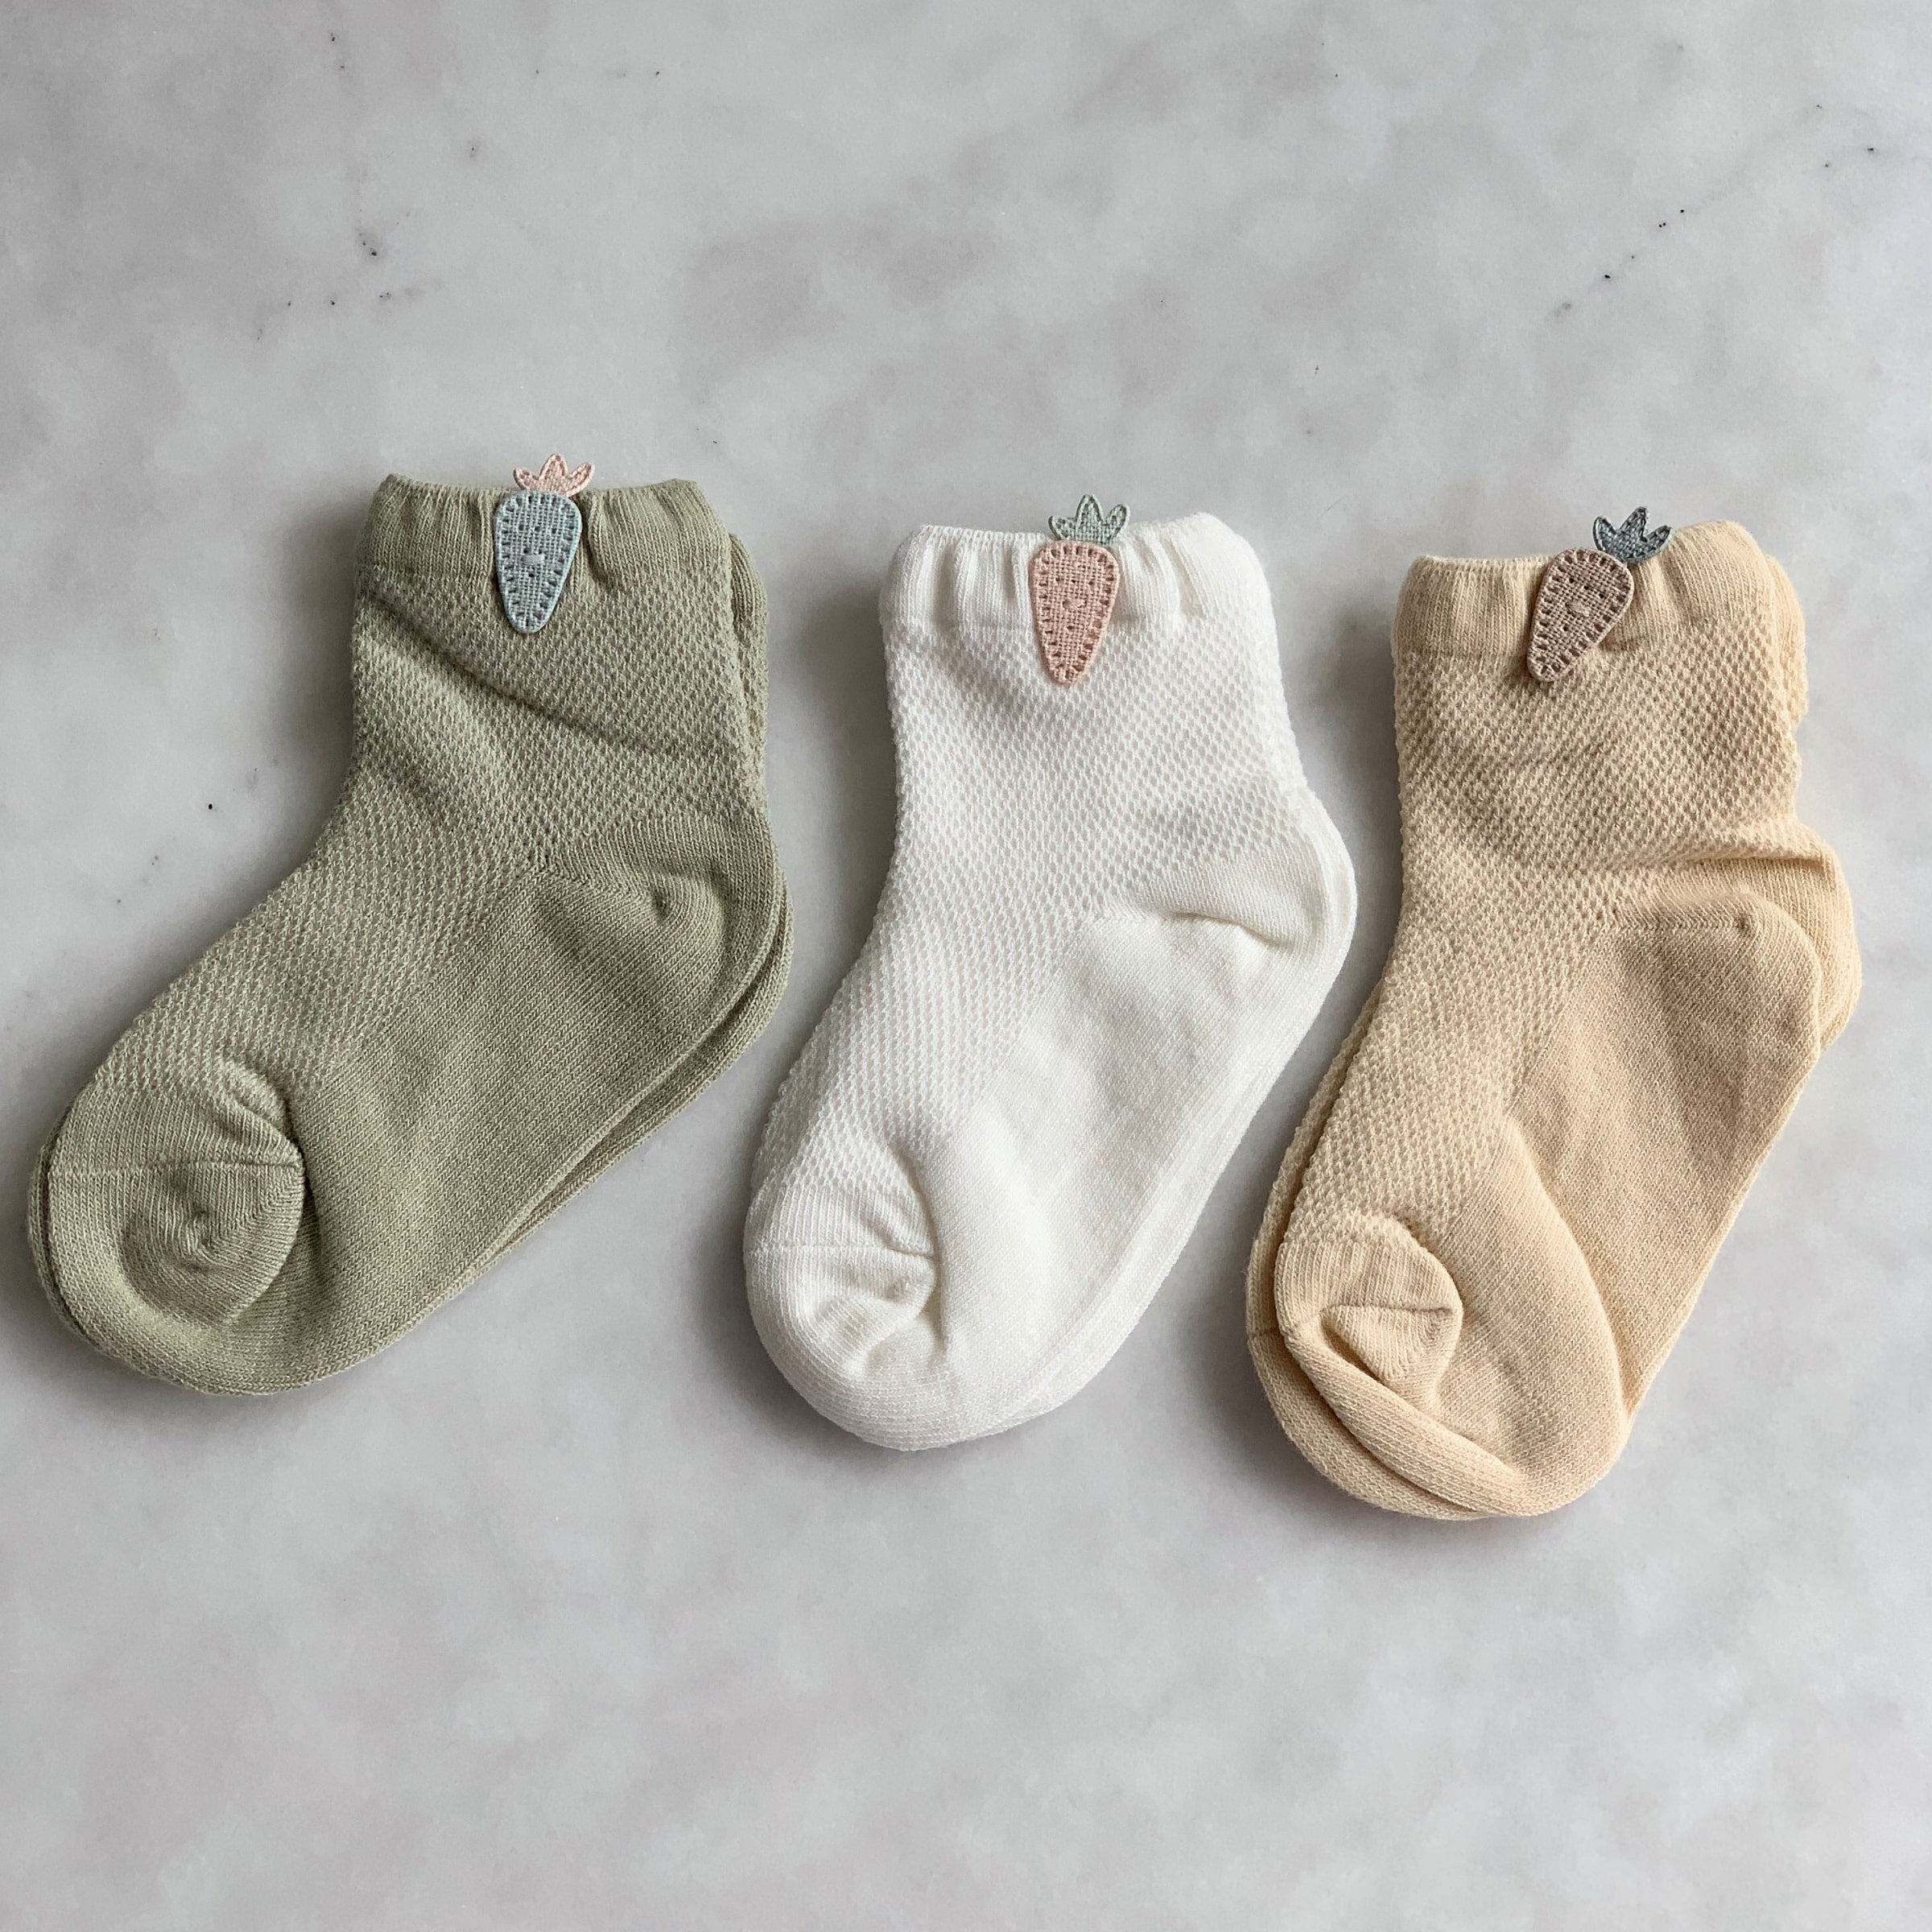 Bug's Carrot Socks - Buy Baby Socks at Louie Meets Lola